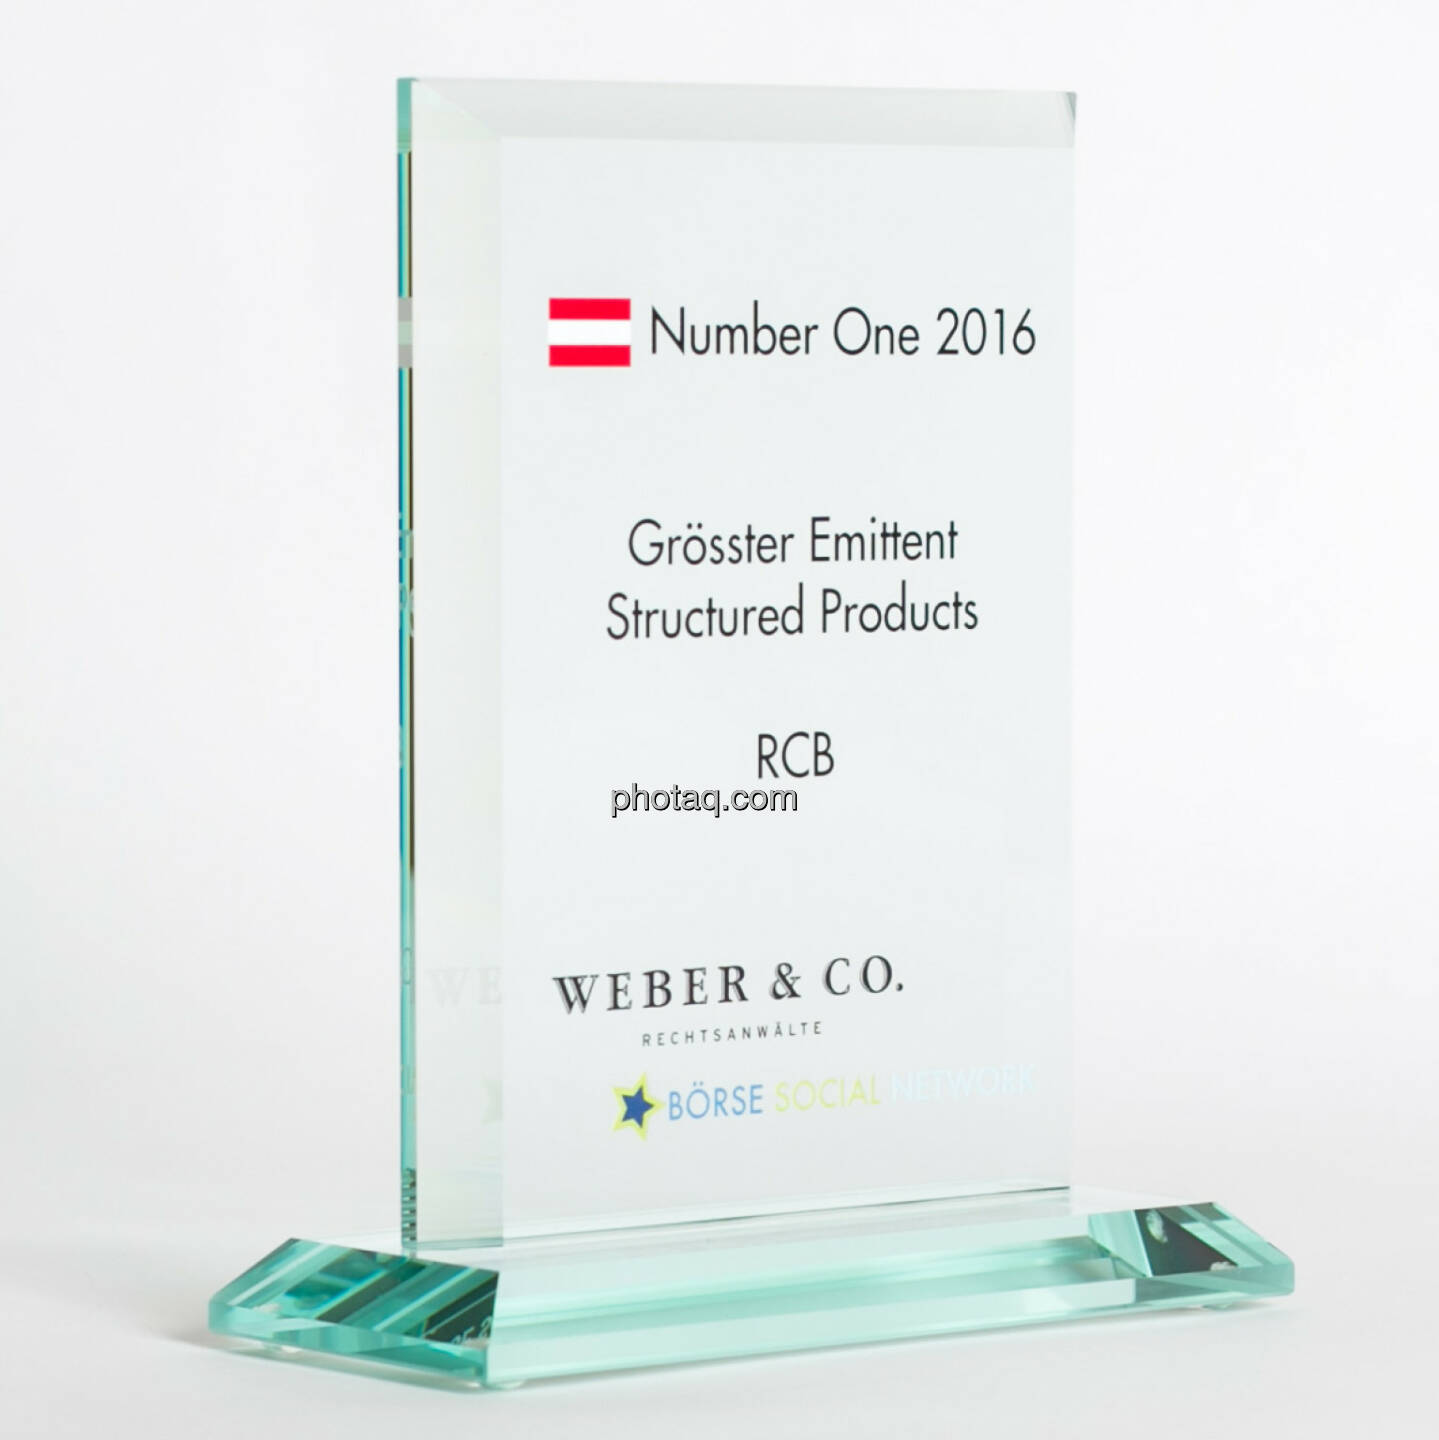 Number One Awards 2016 - Grösster Emittent Structured Products RCB